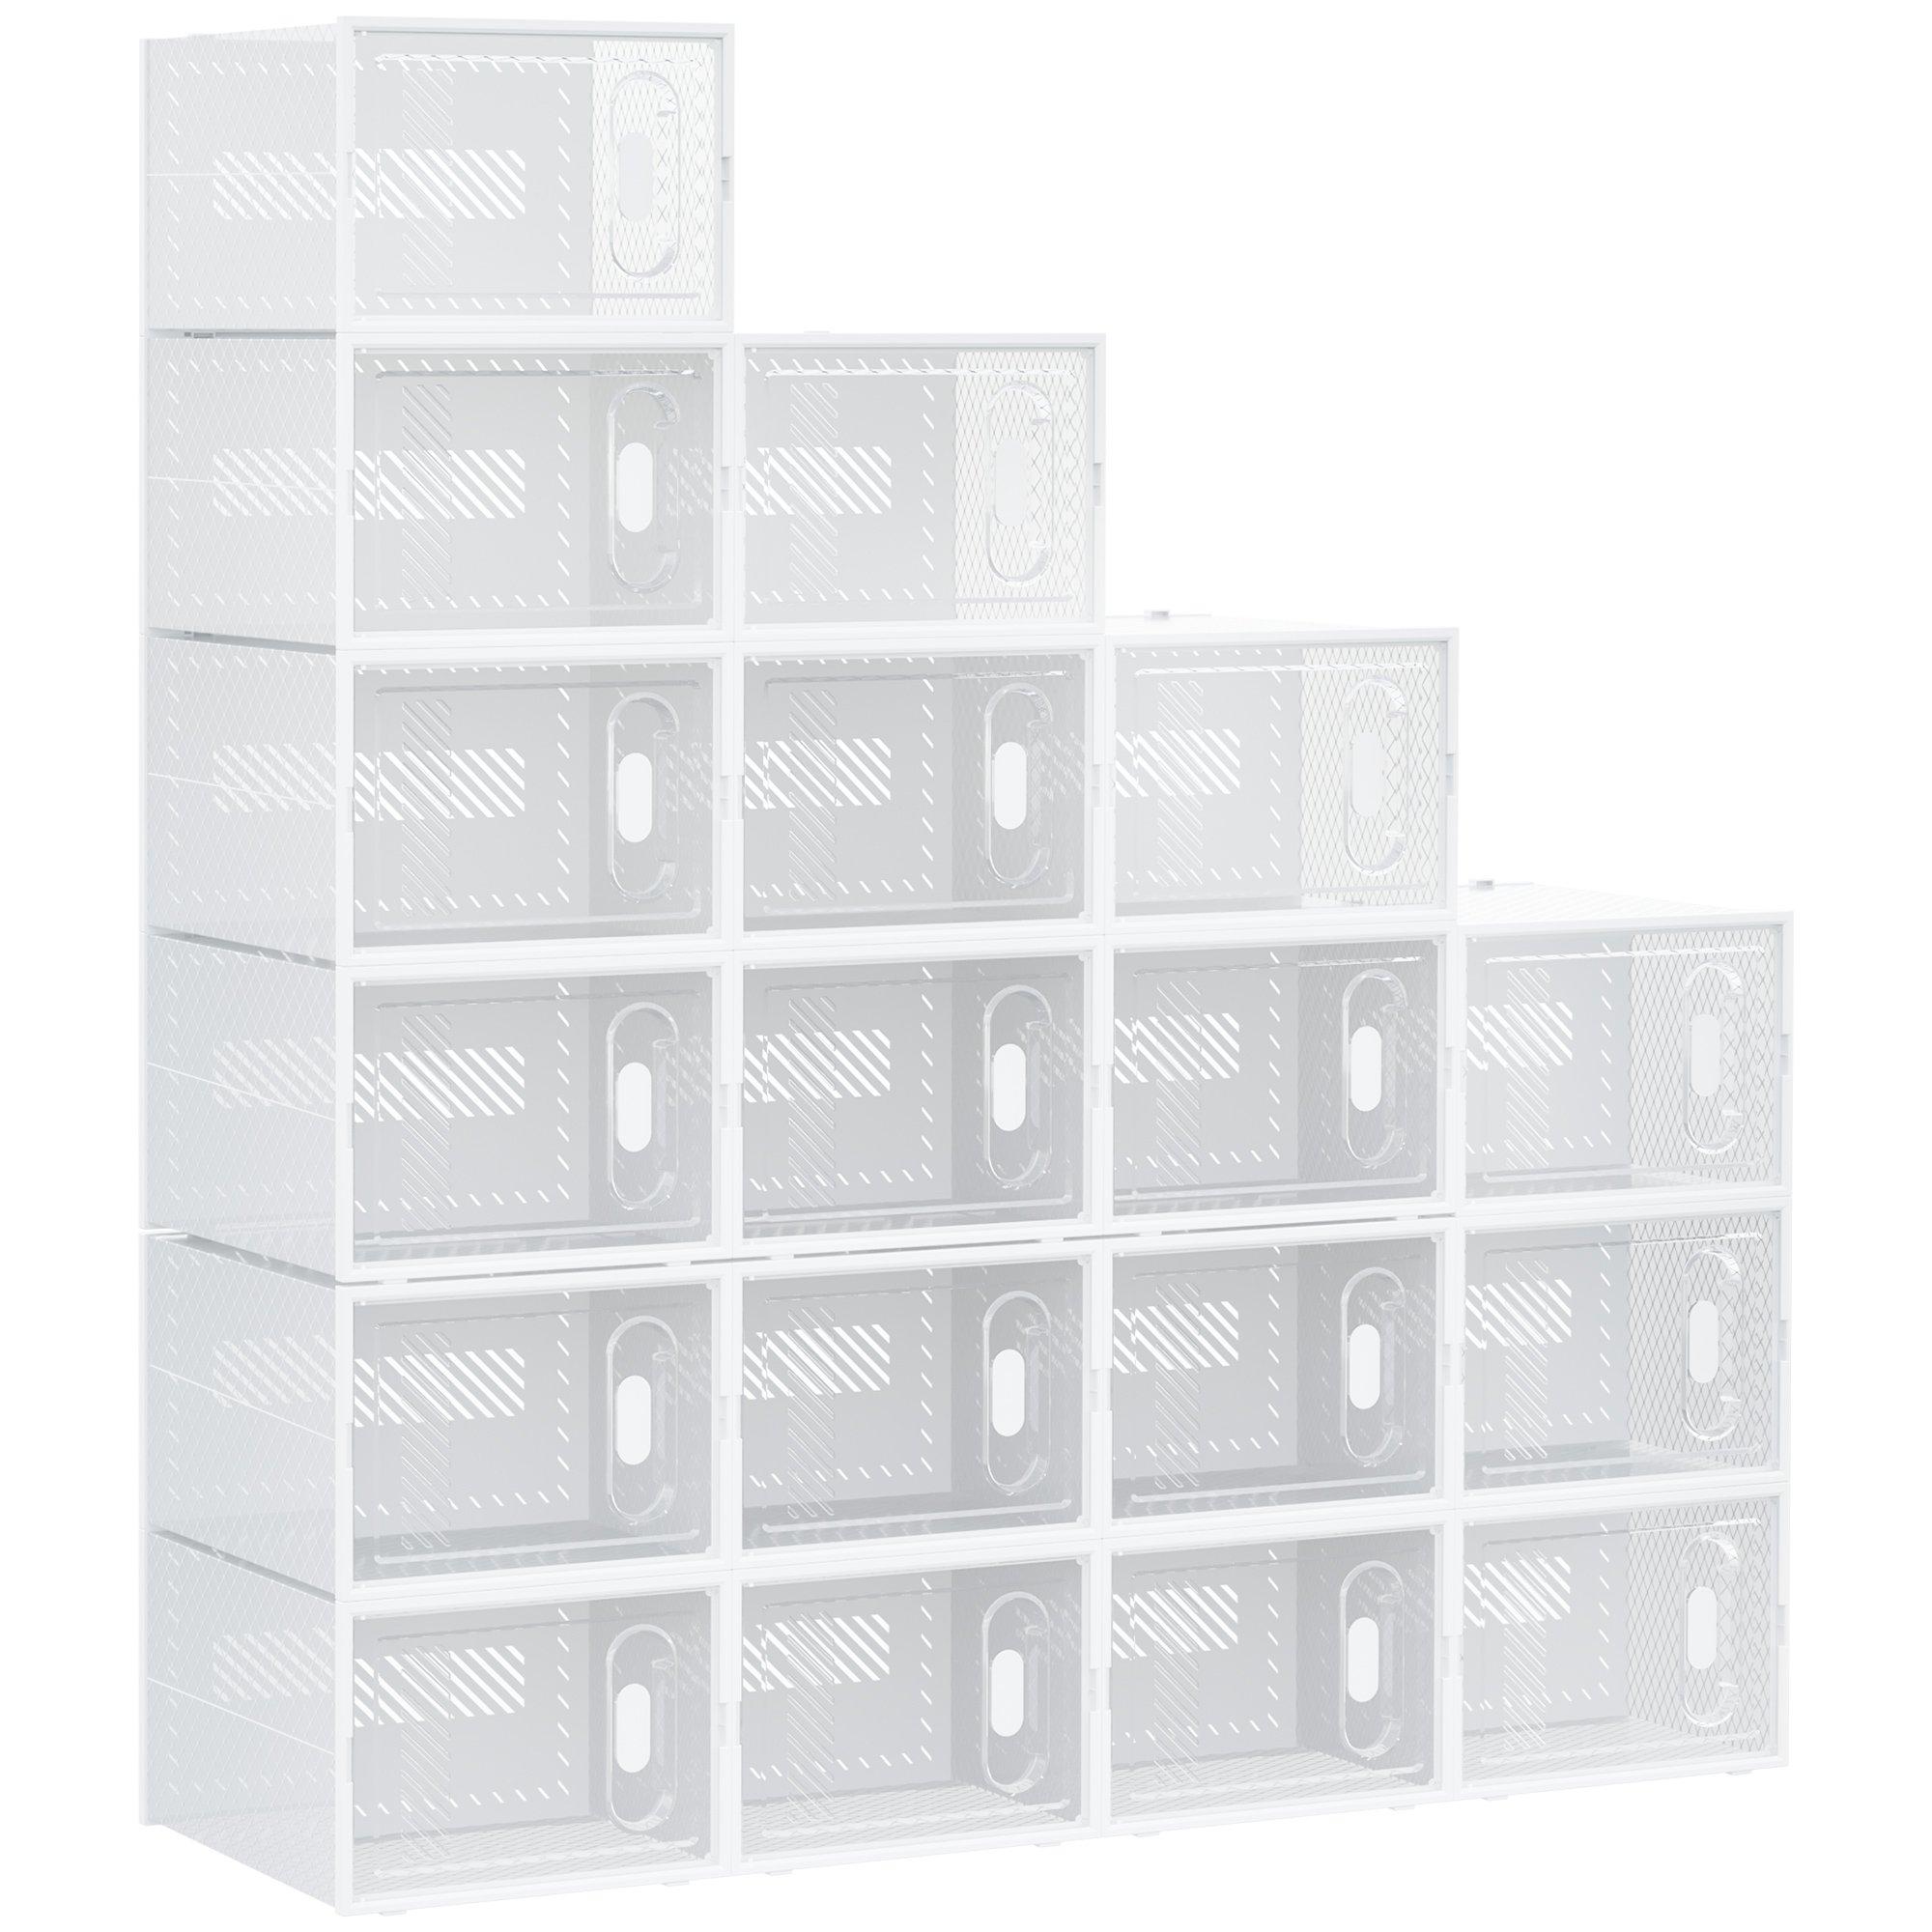 18PCS Stackable Shoe Box Clear Plastic Shoe Storage Box for UK or EU